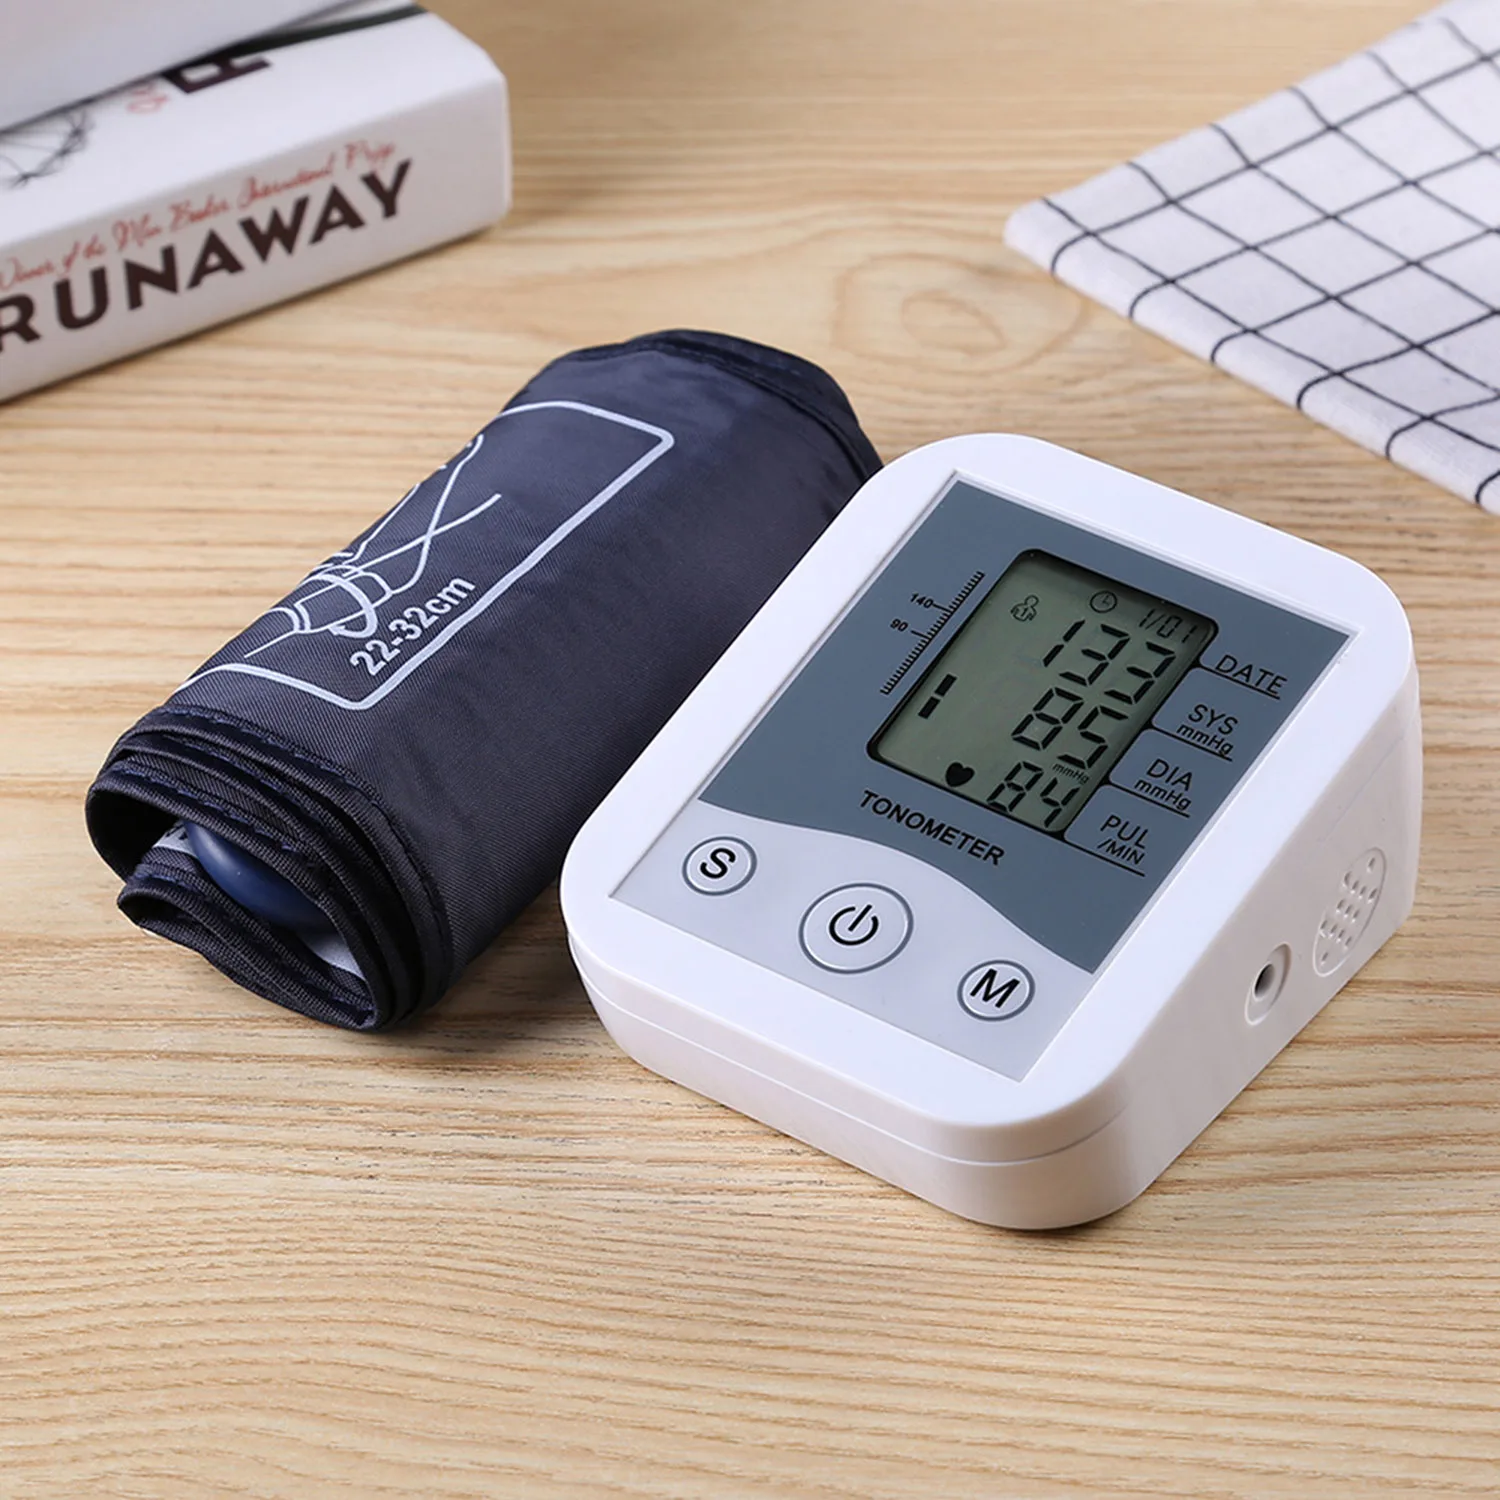 

Tonometer Arm Sphygmomanometer Blood Pressure Monitor Pulse Scanning Oscillometry Measuring for Measuring Pulse Rate